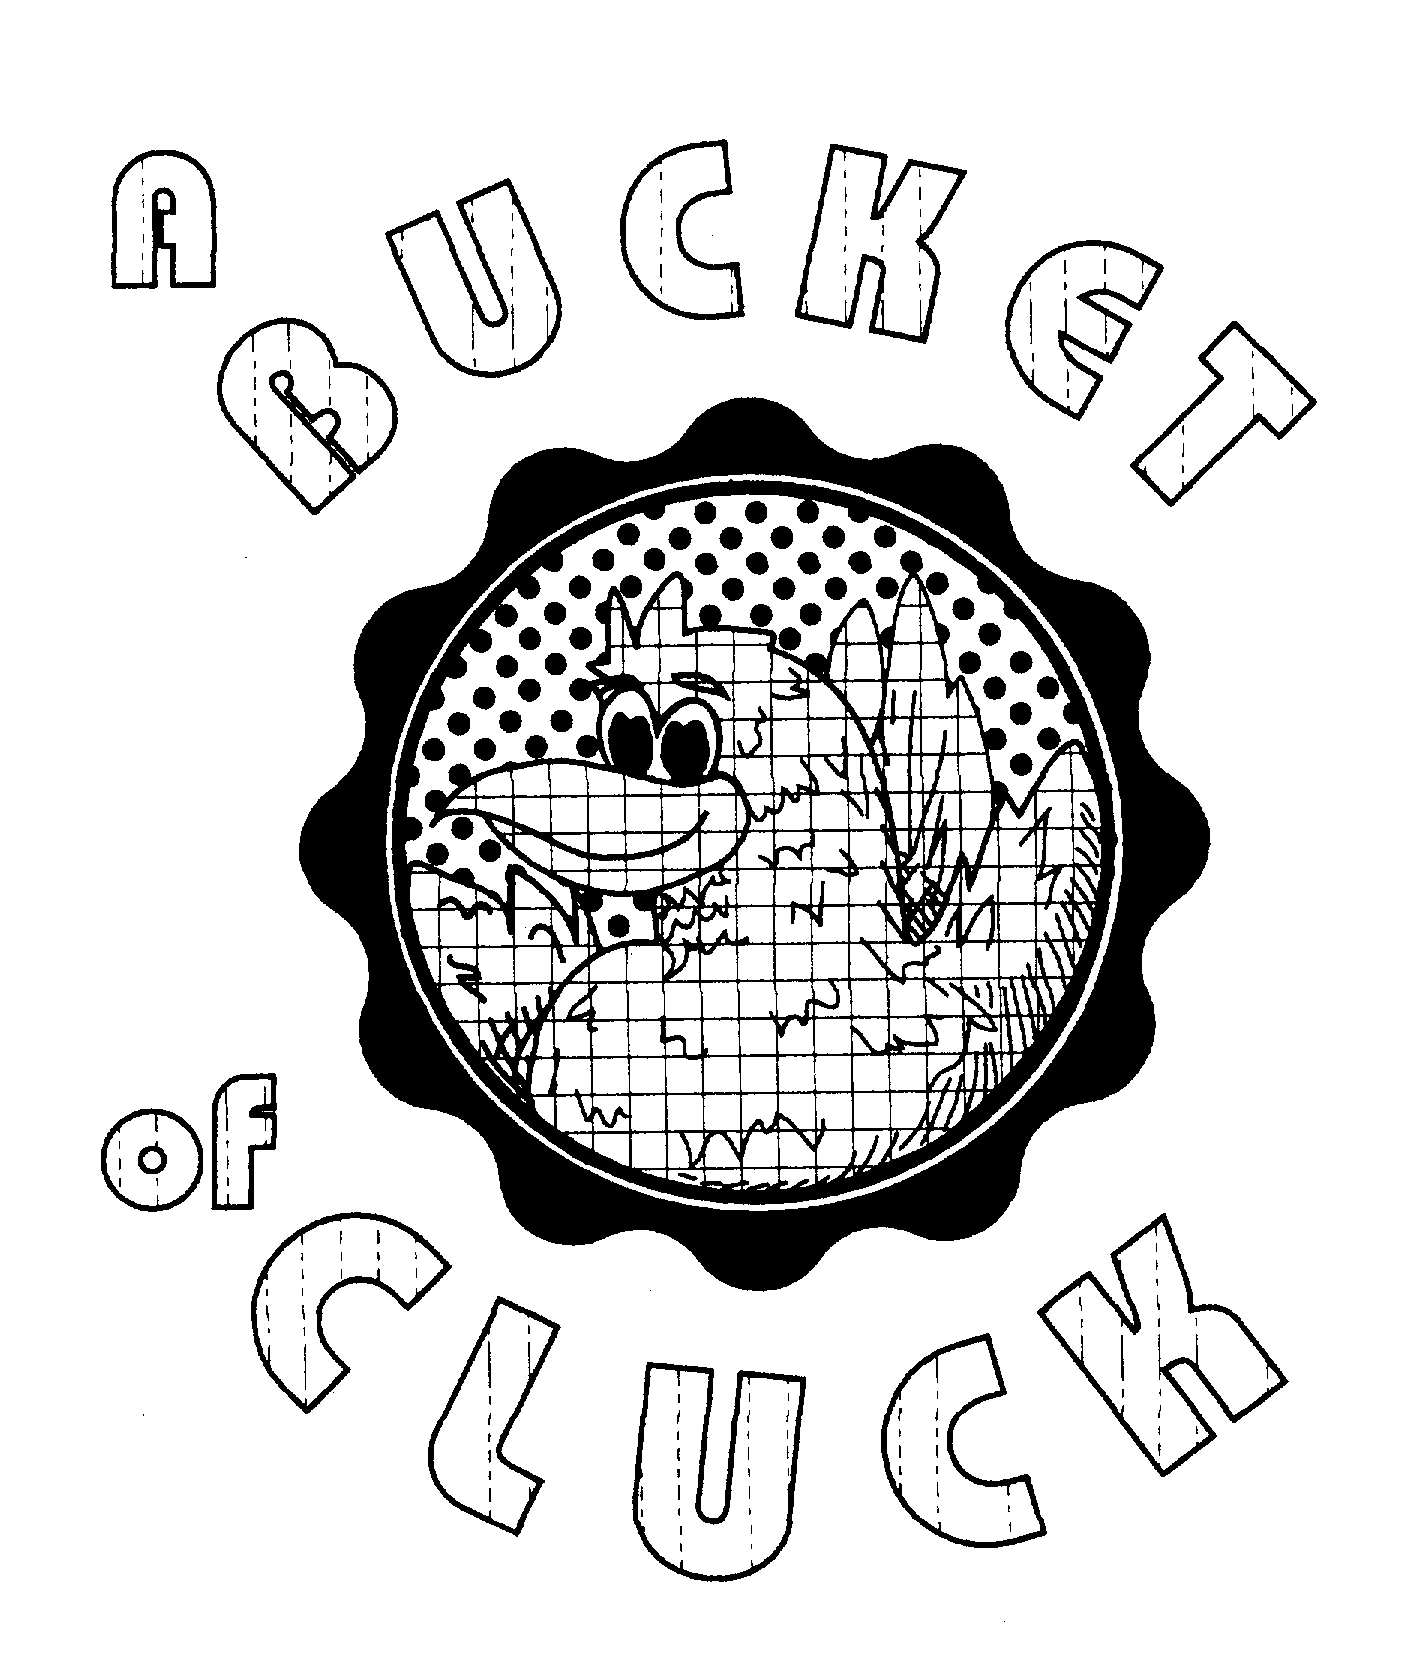  A BUCKET OF CLUCK